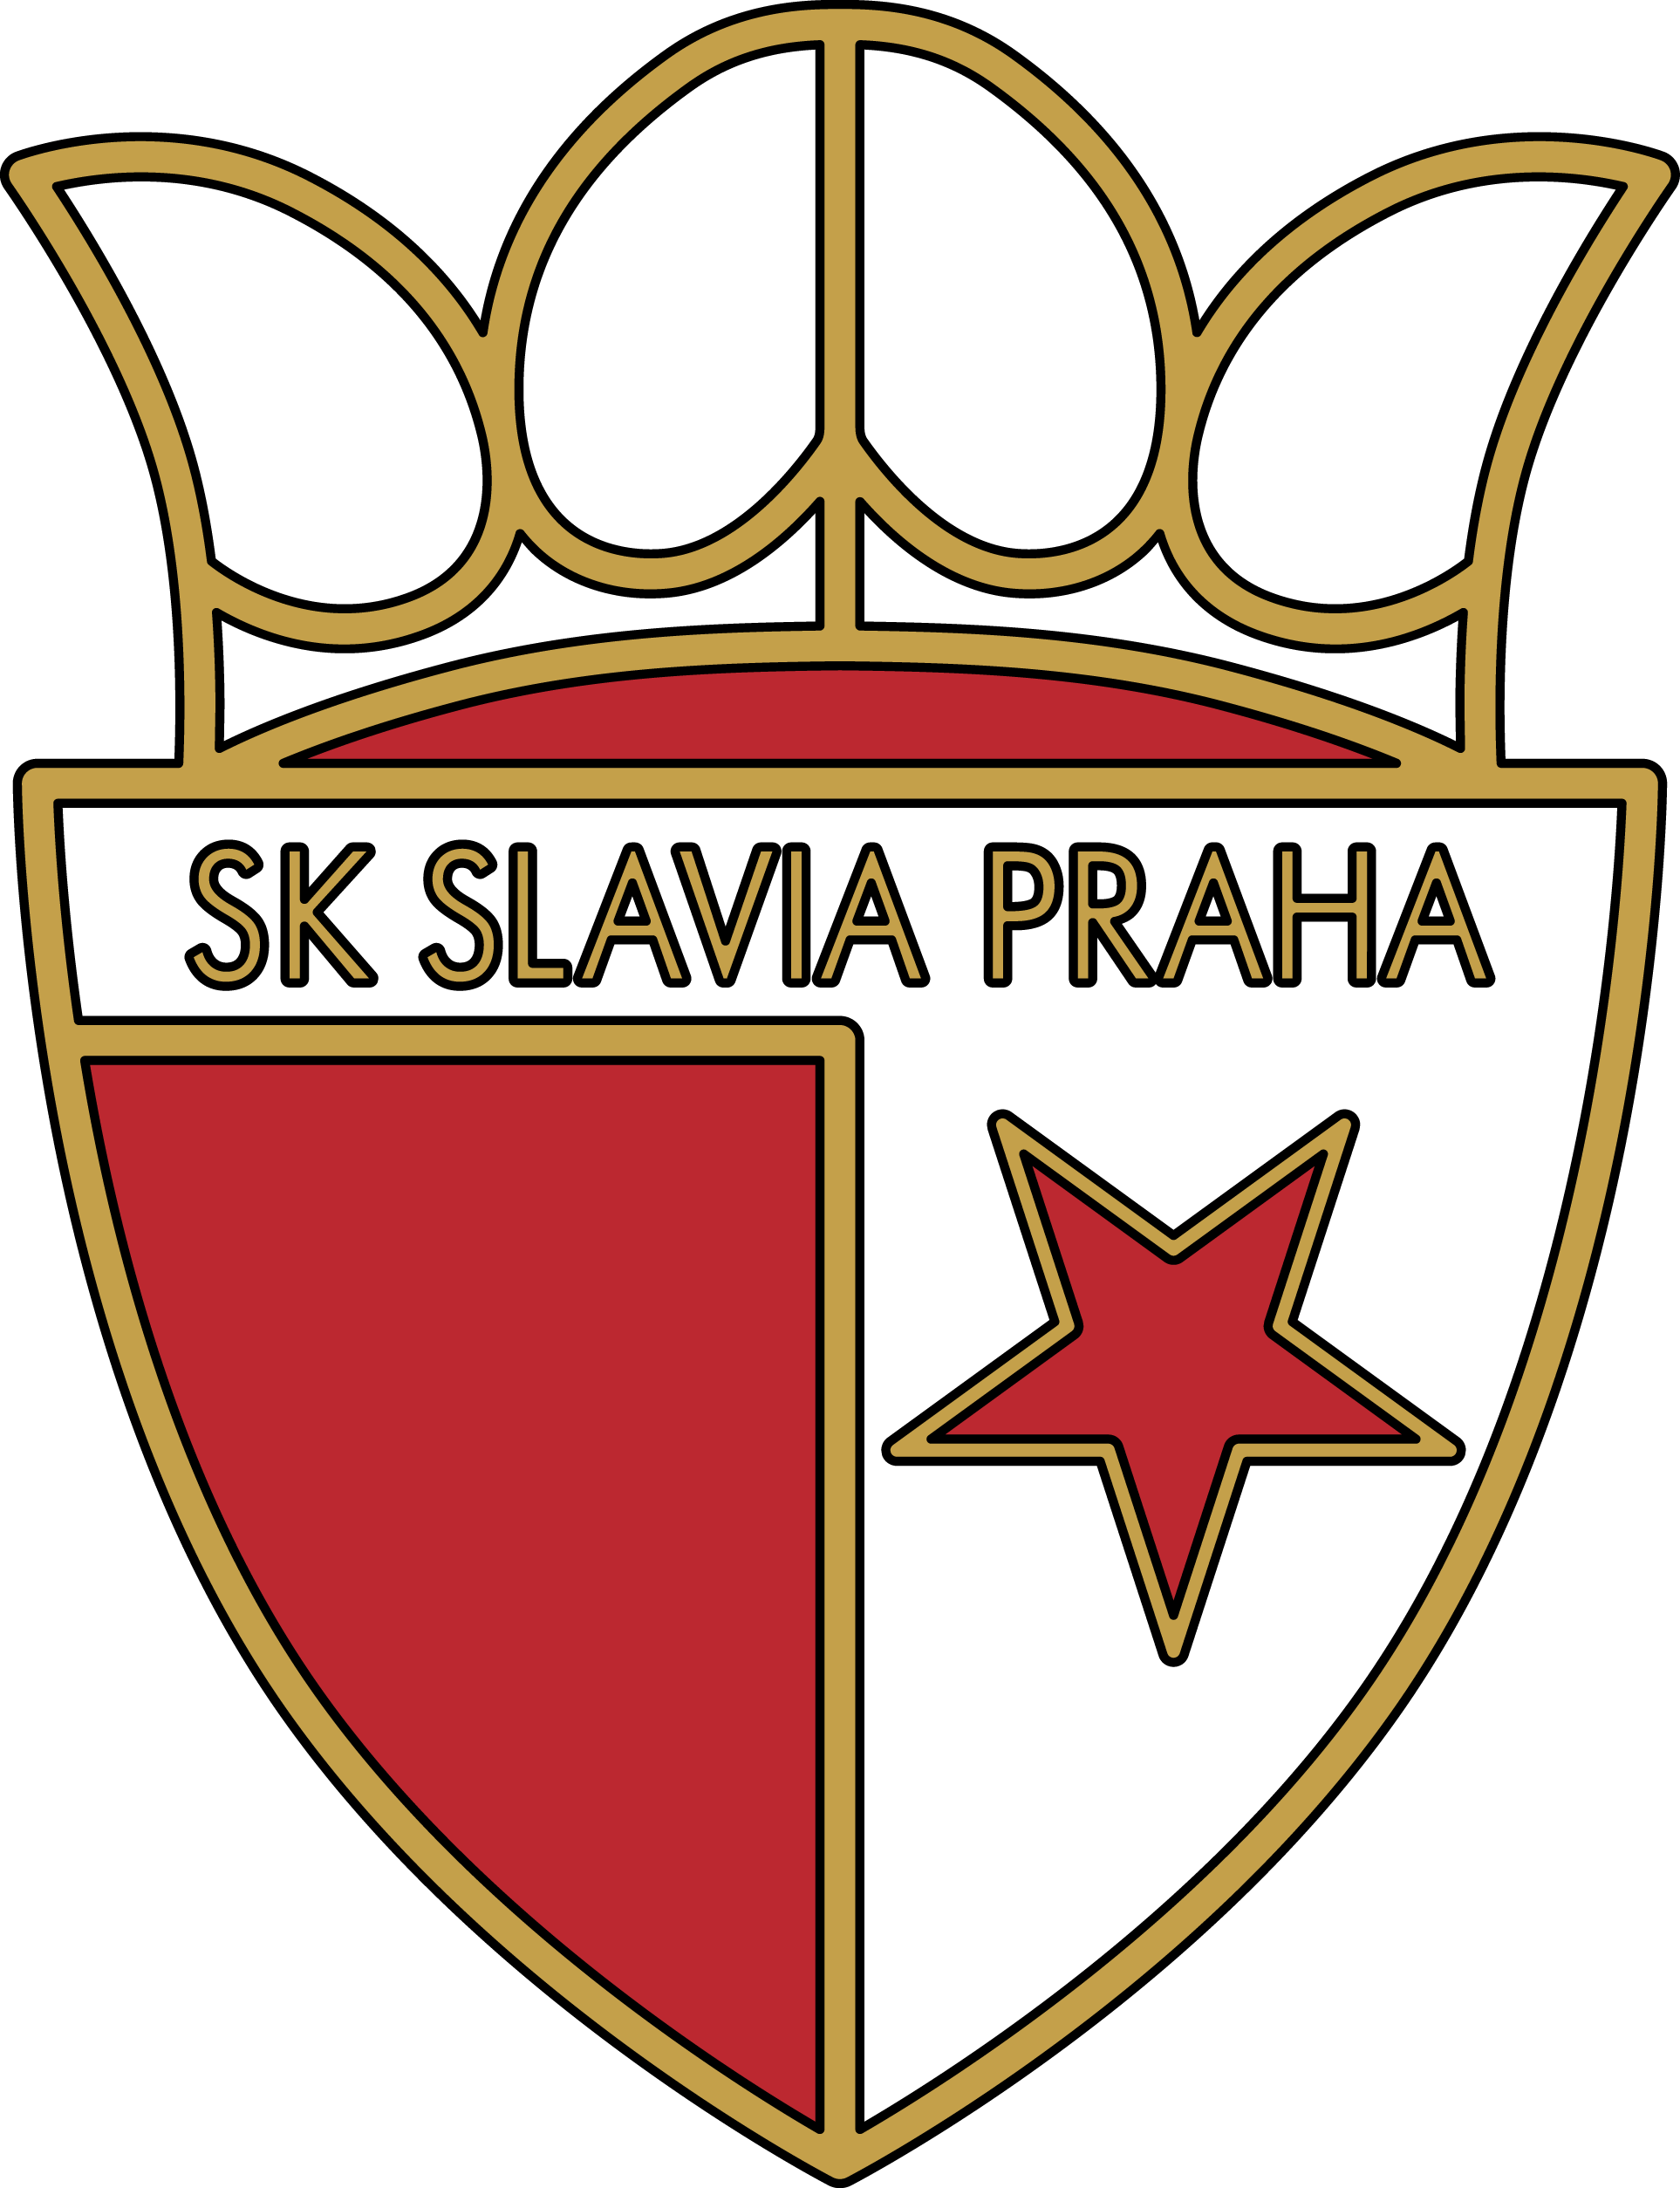 SK Slavia Praha. sk slavia Praha